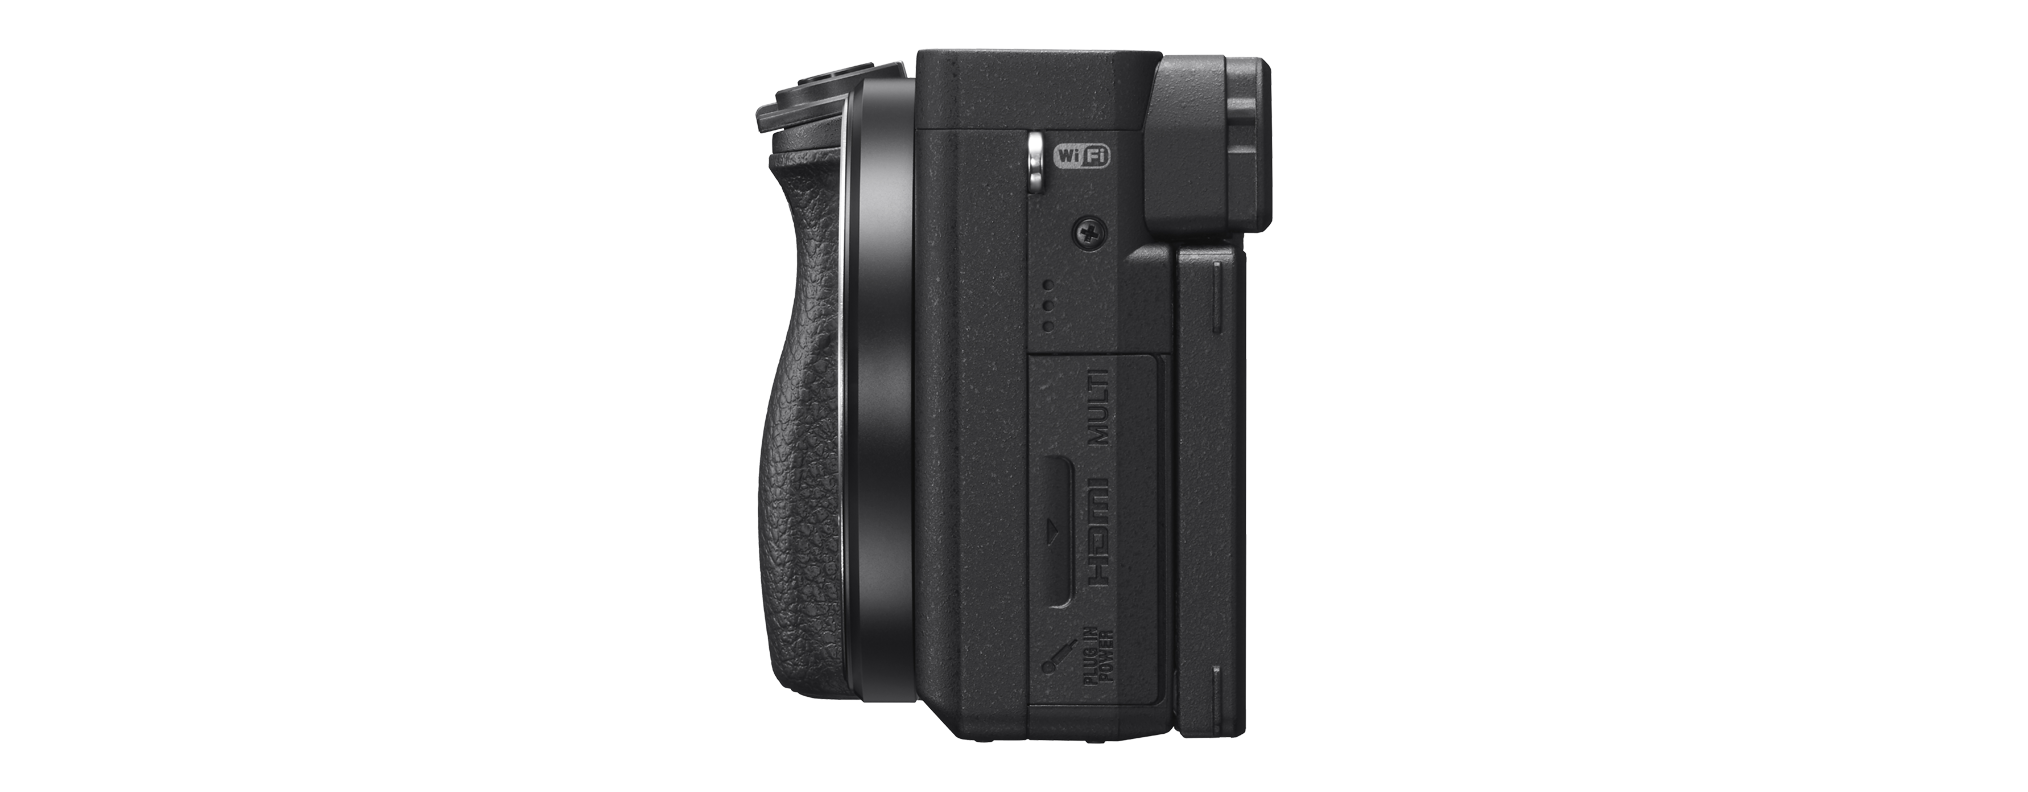 SONY Alpha 6400 (ILCE-6400M) mm, cm Touchscreen, Display mit Objektiv WLAN Kit 7,6 18-135 Systemkamera